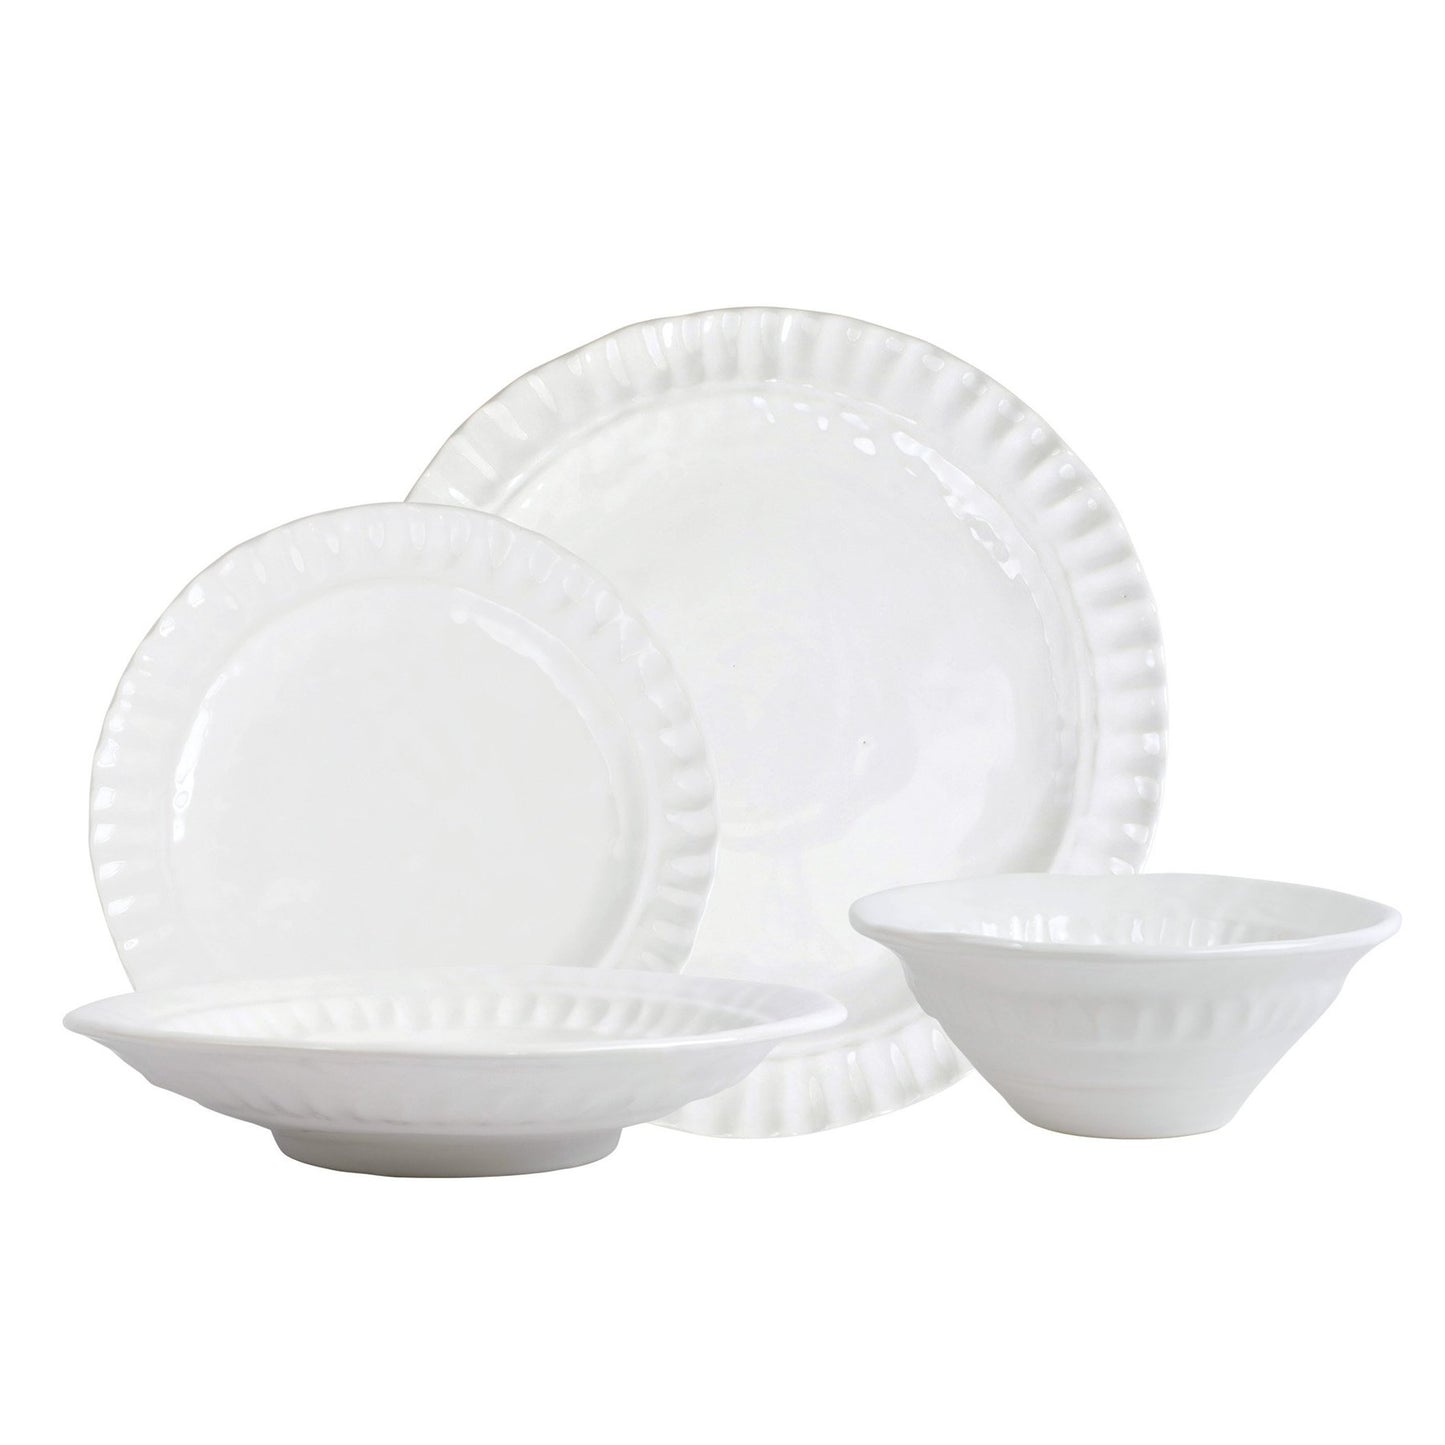 Vietri Pietra Serena 16-Pc Italian Dinnerware Set - Stoneware Bowls & Plates